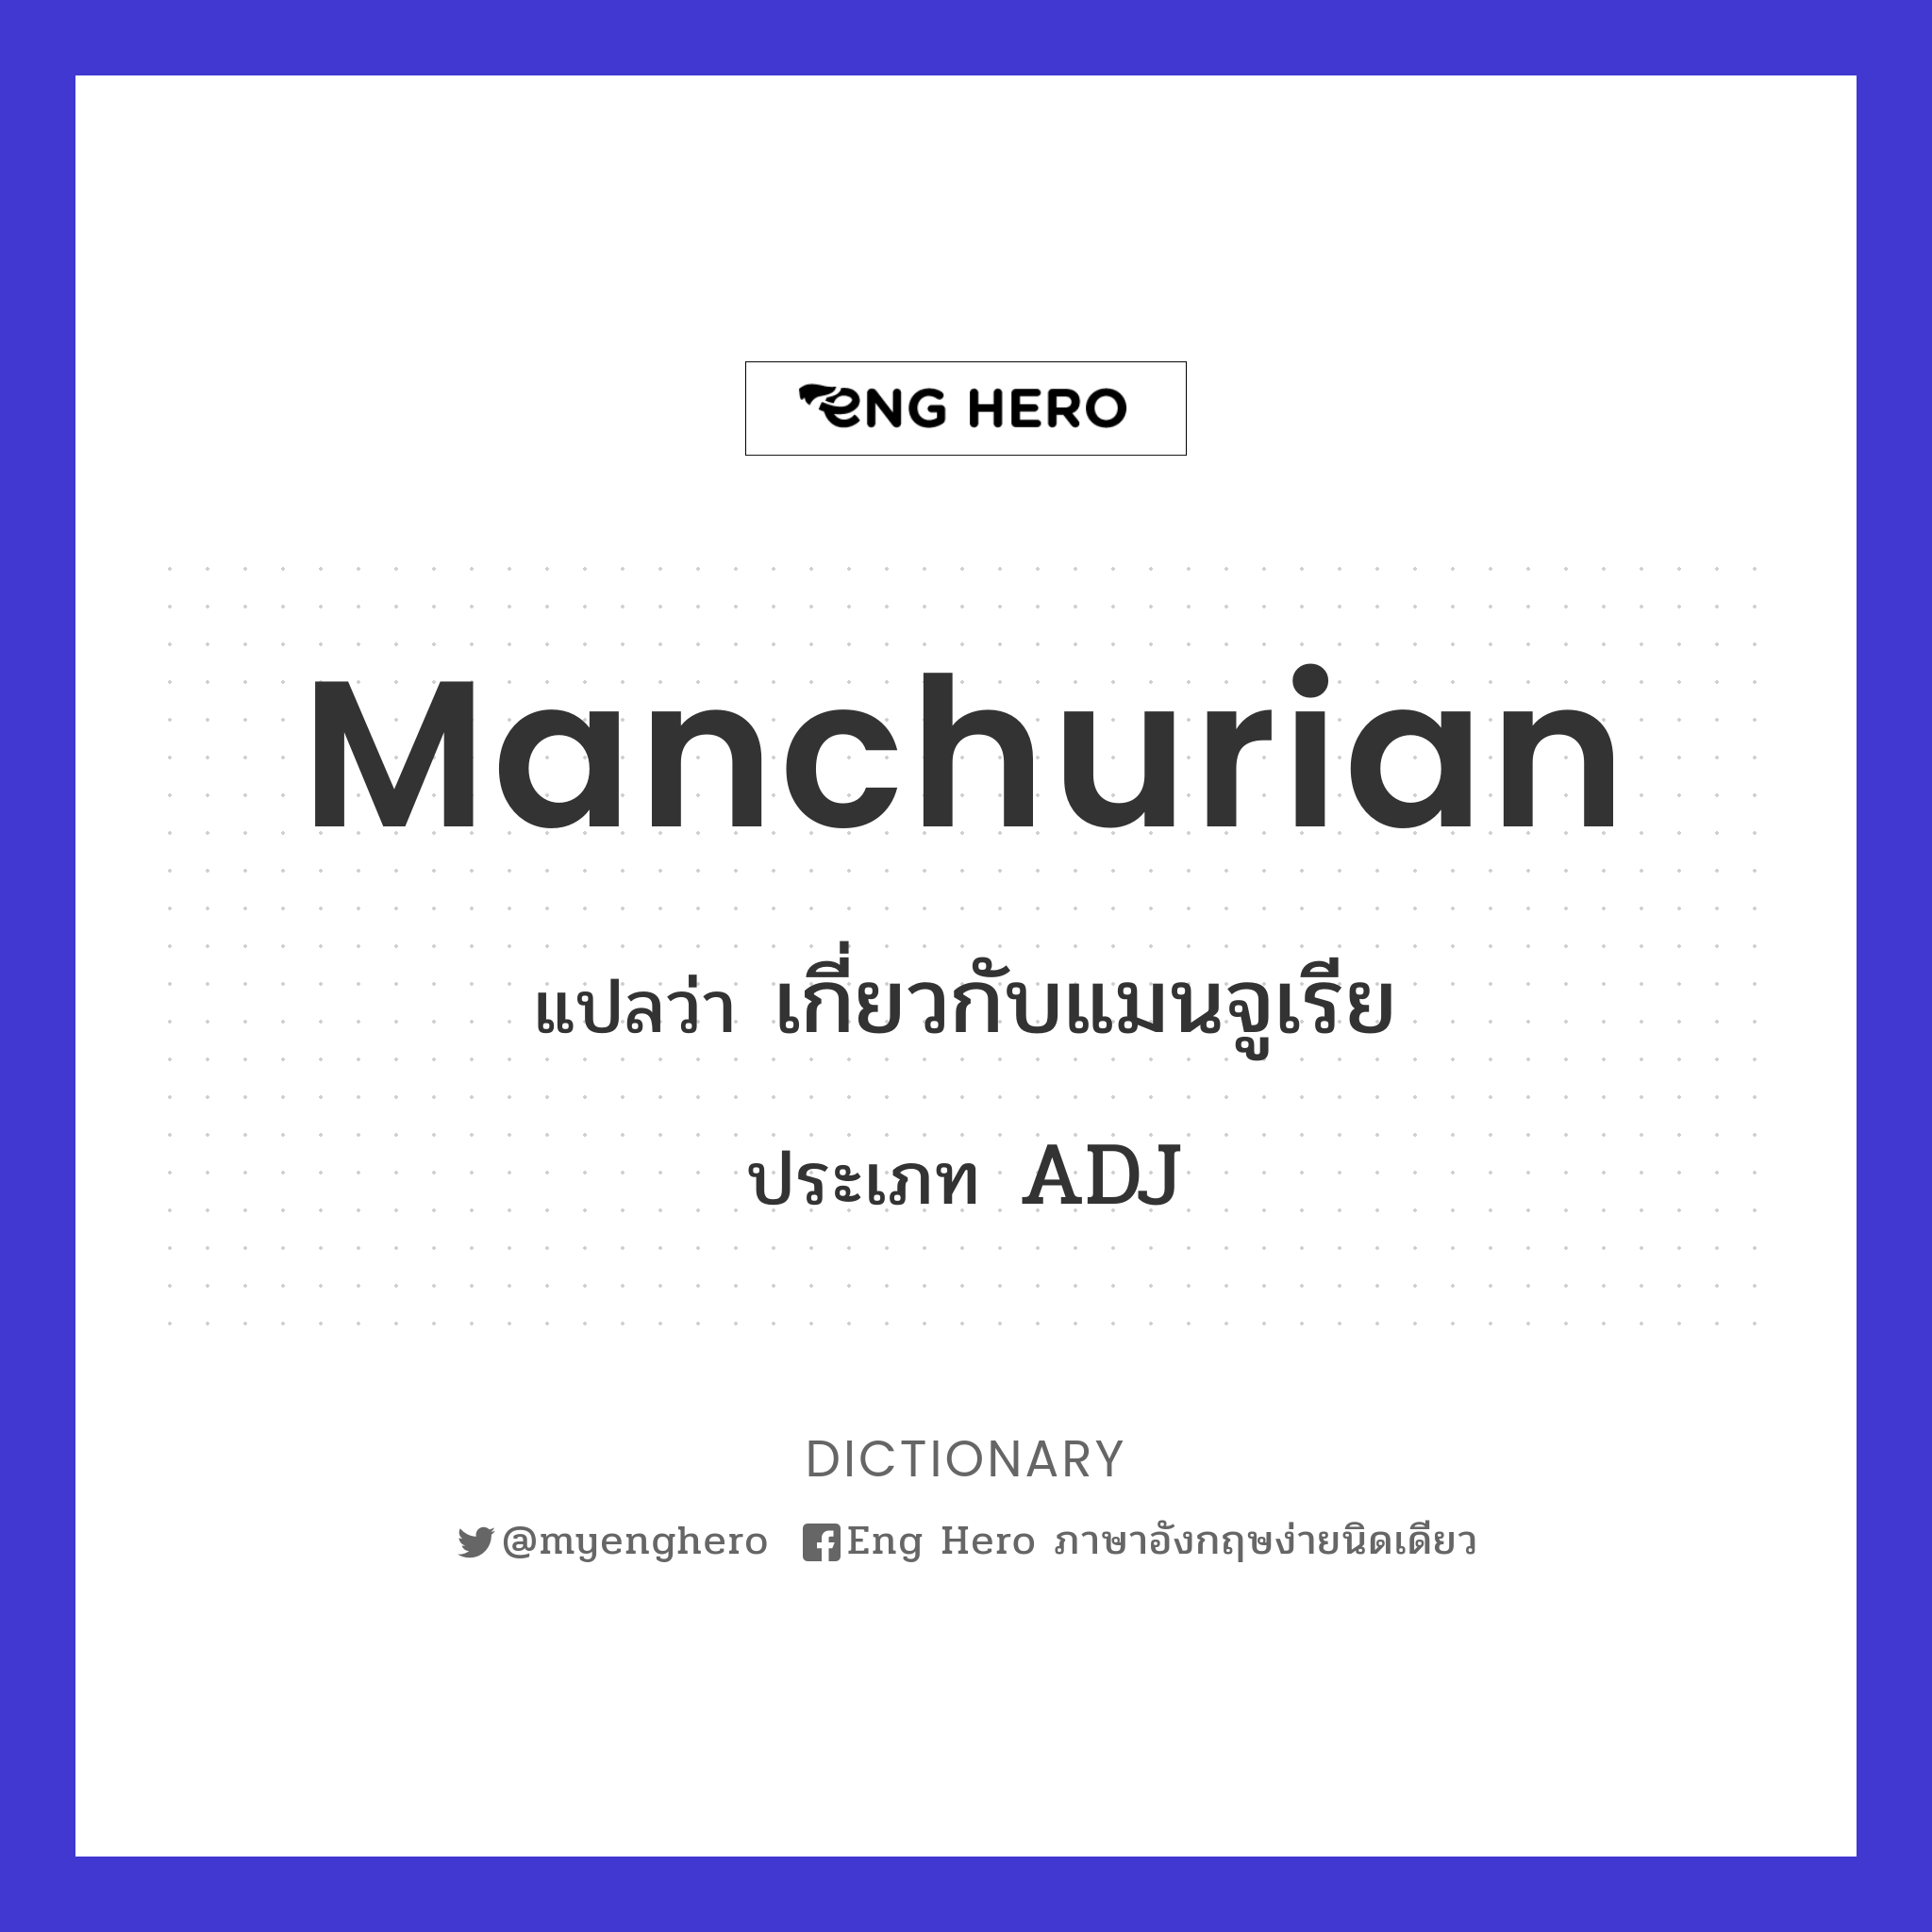 Manchurian